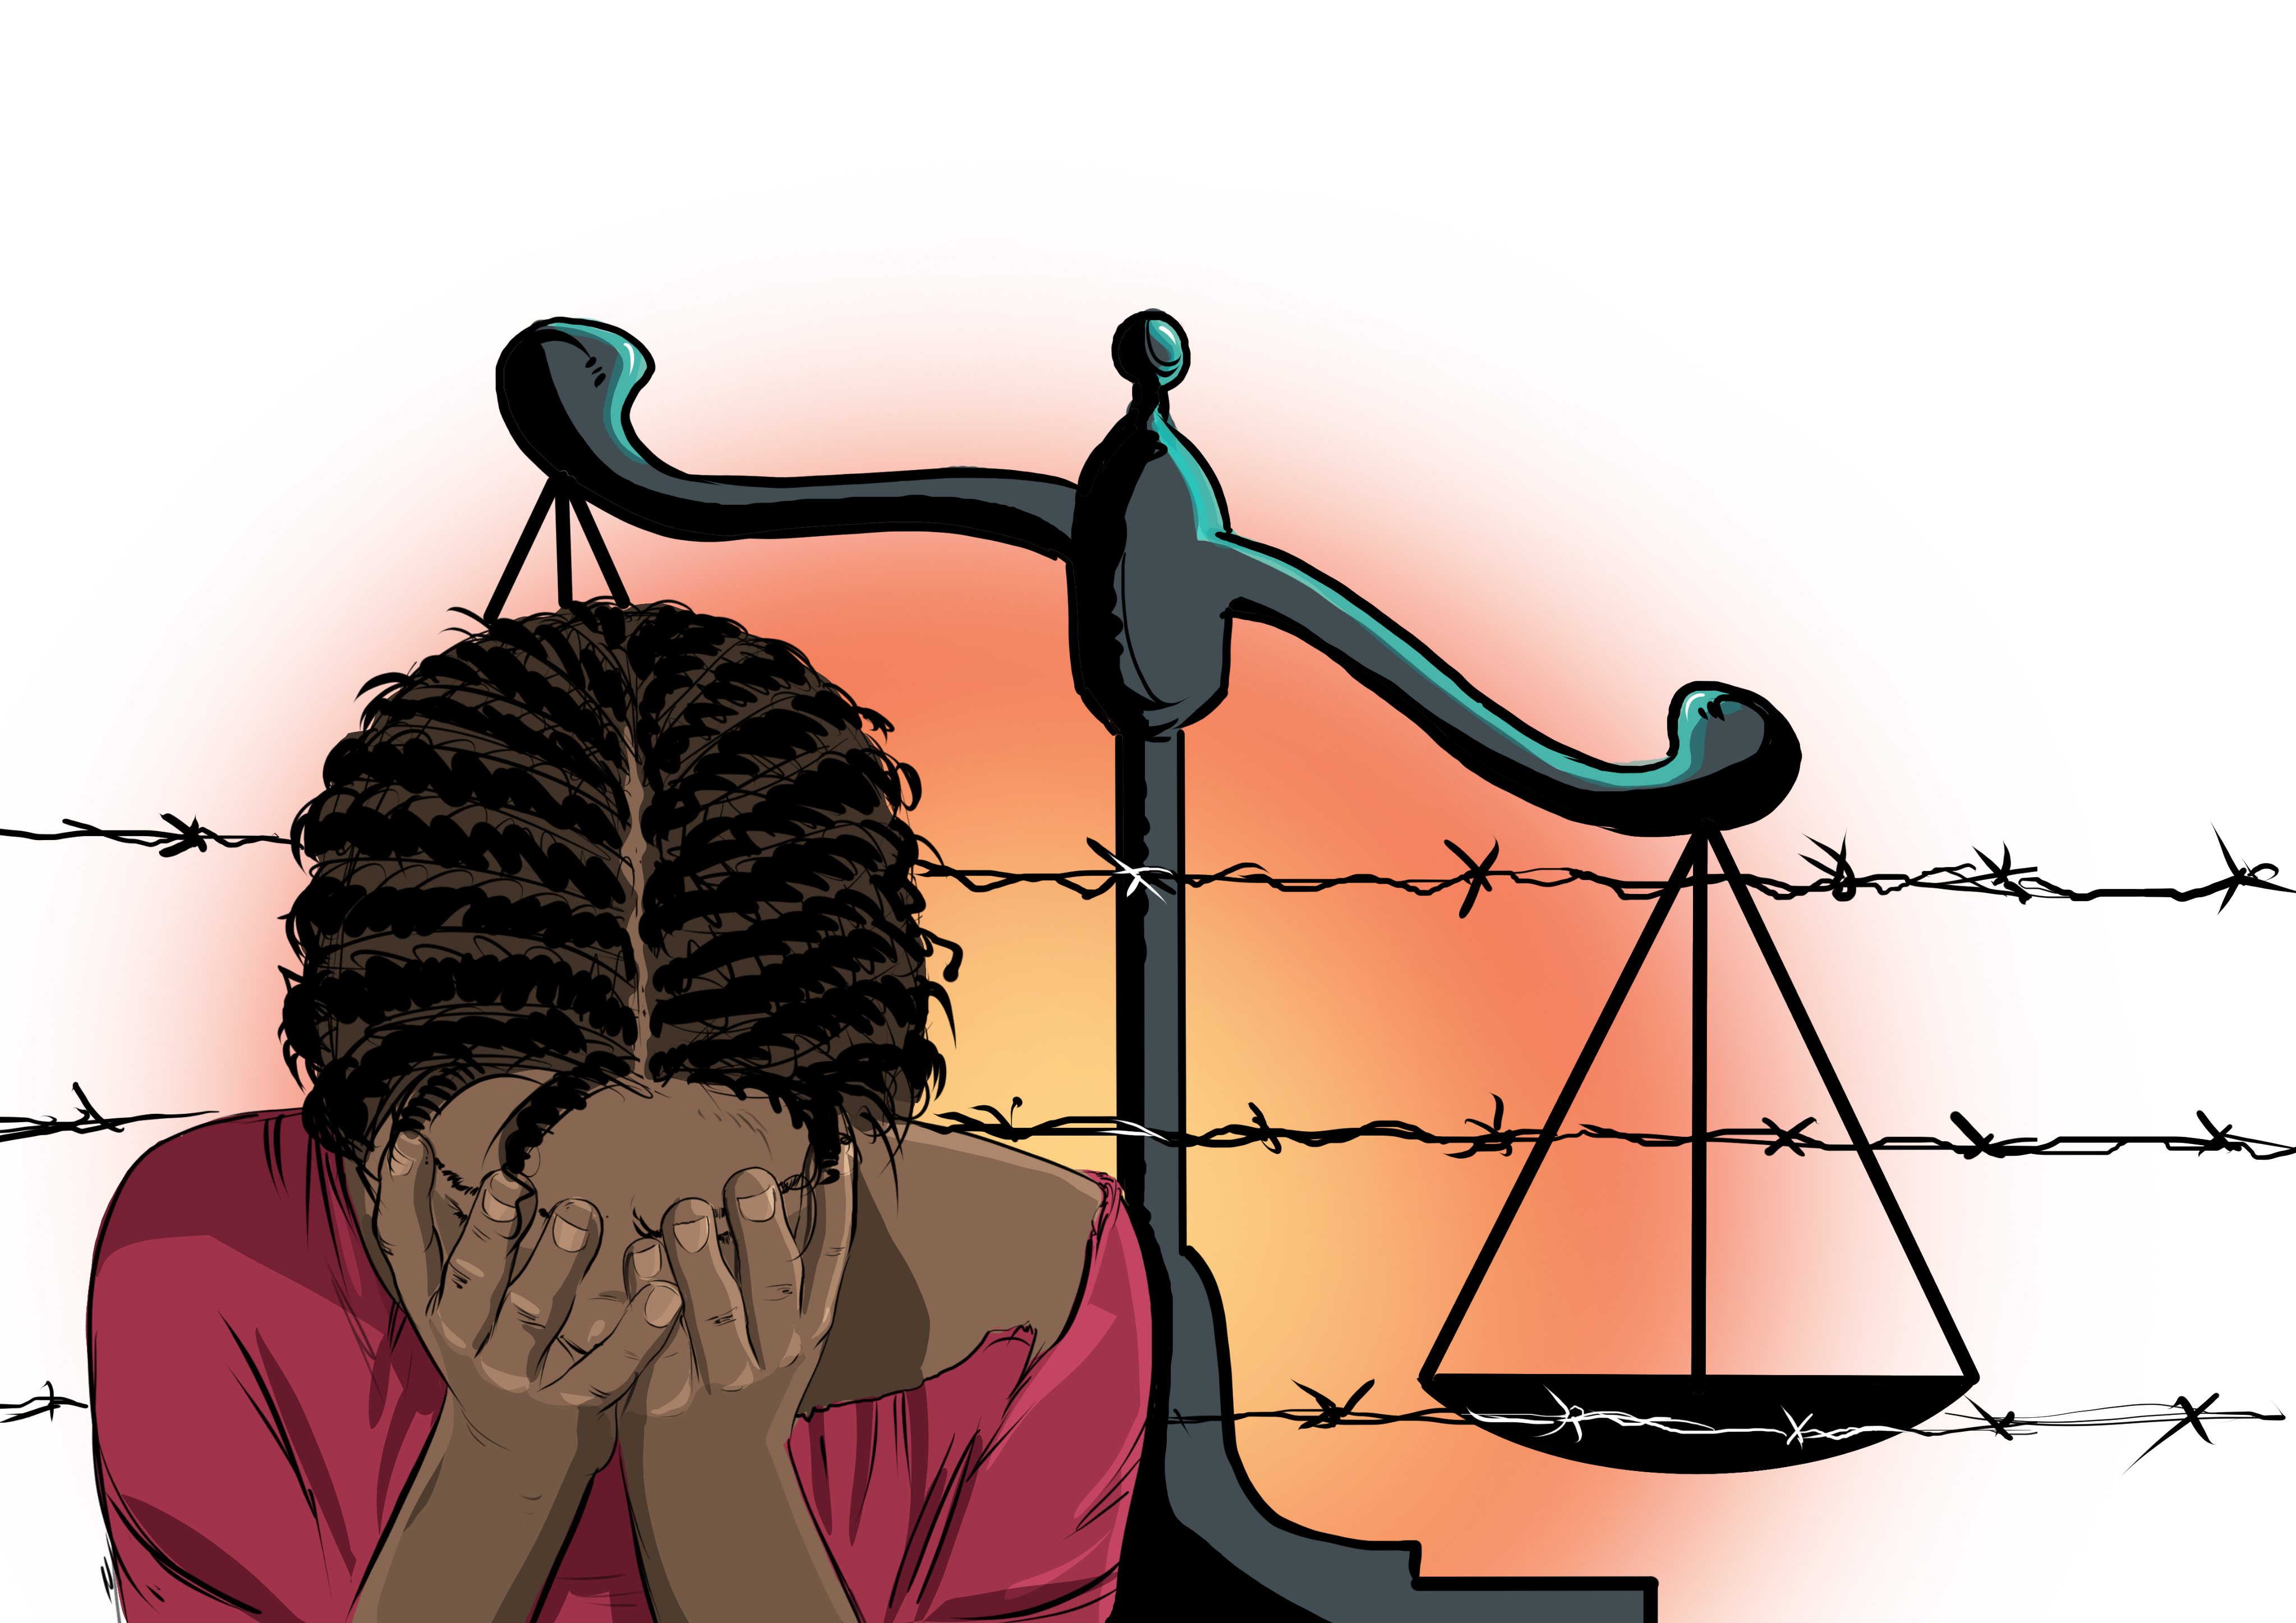 Jabrdhsti Rep Sex Vidose - Nigeria: Failure to tackle rape crisis emboldens perpetrators and silences  survivors - Amnesty International